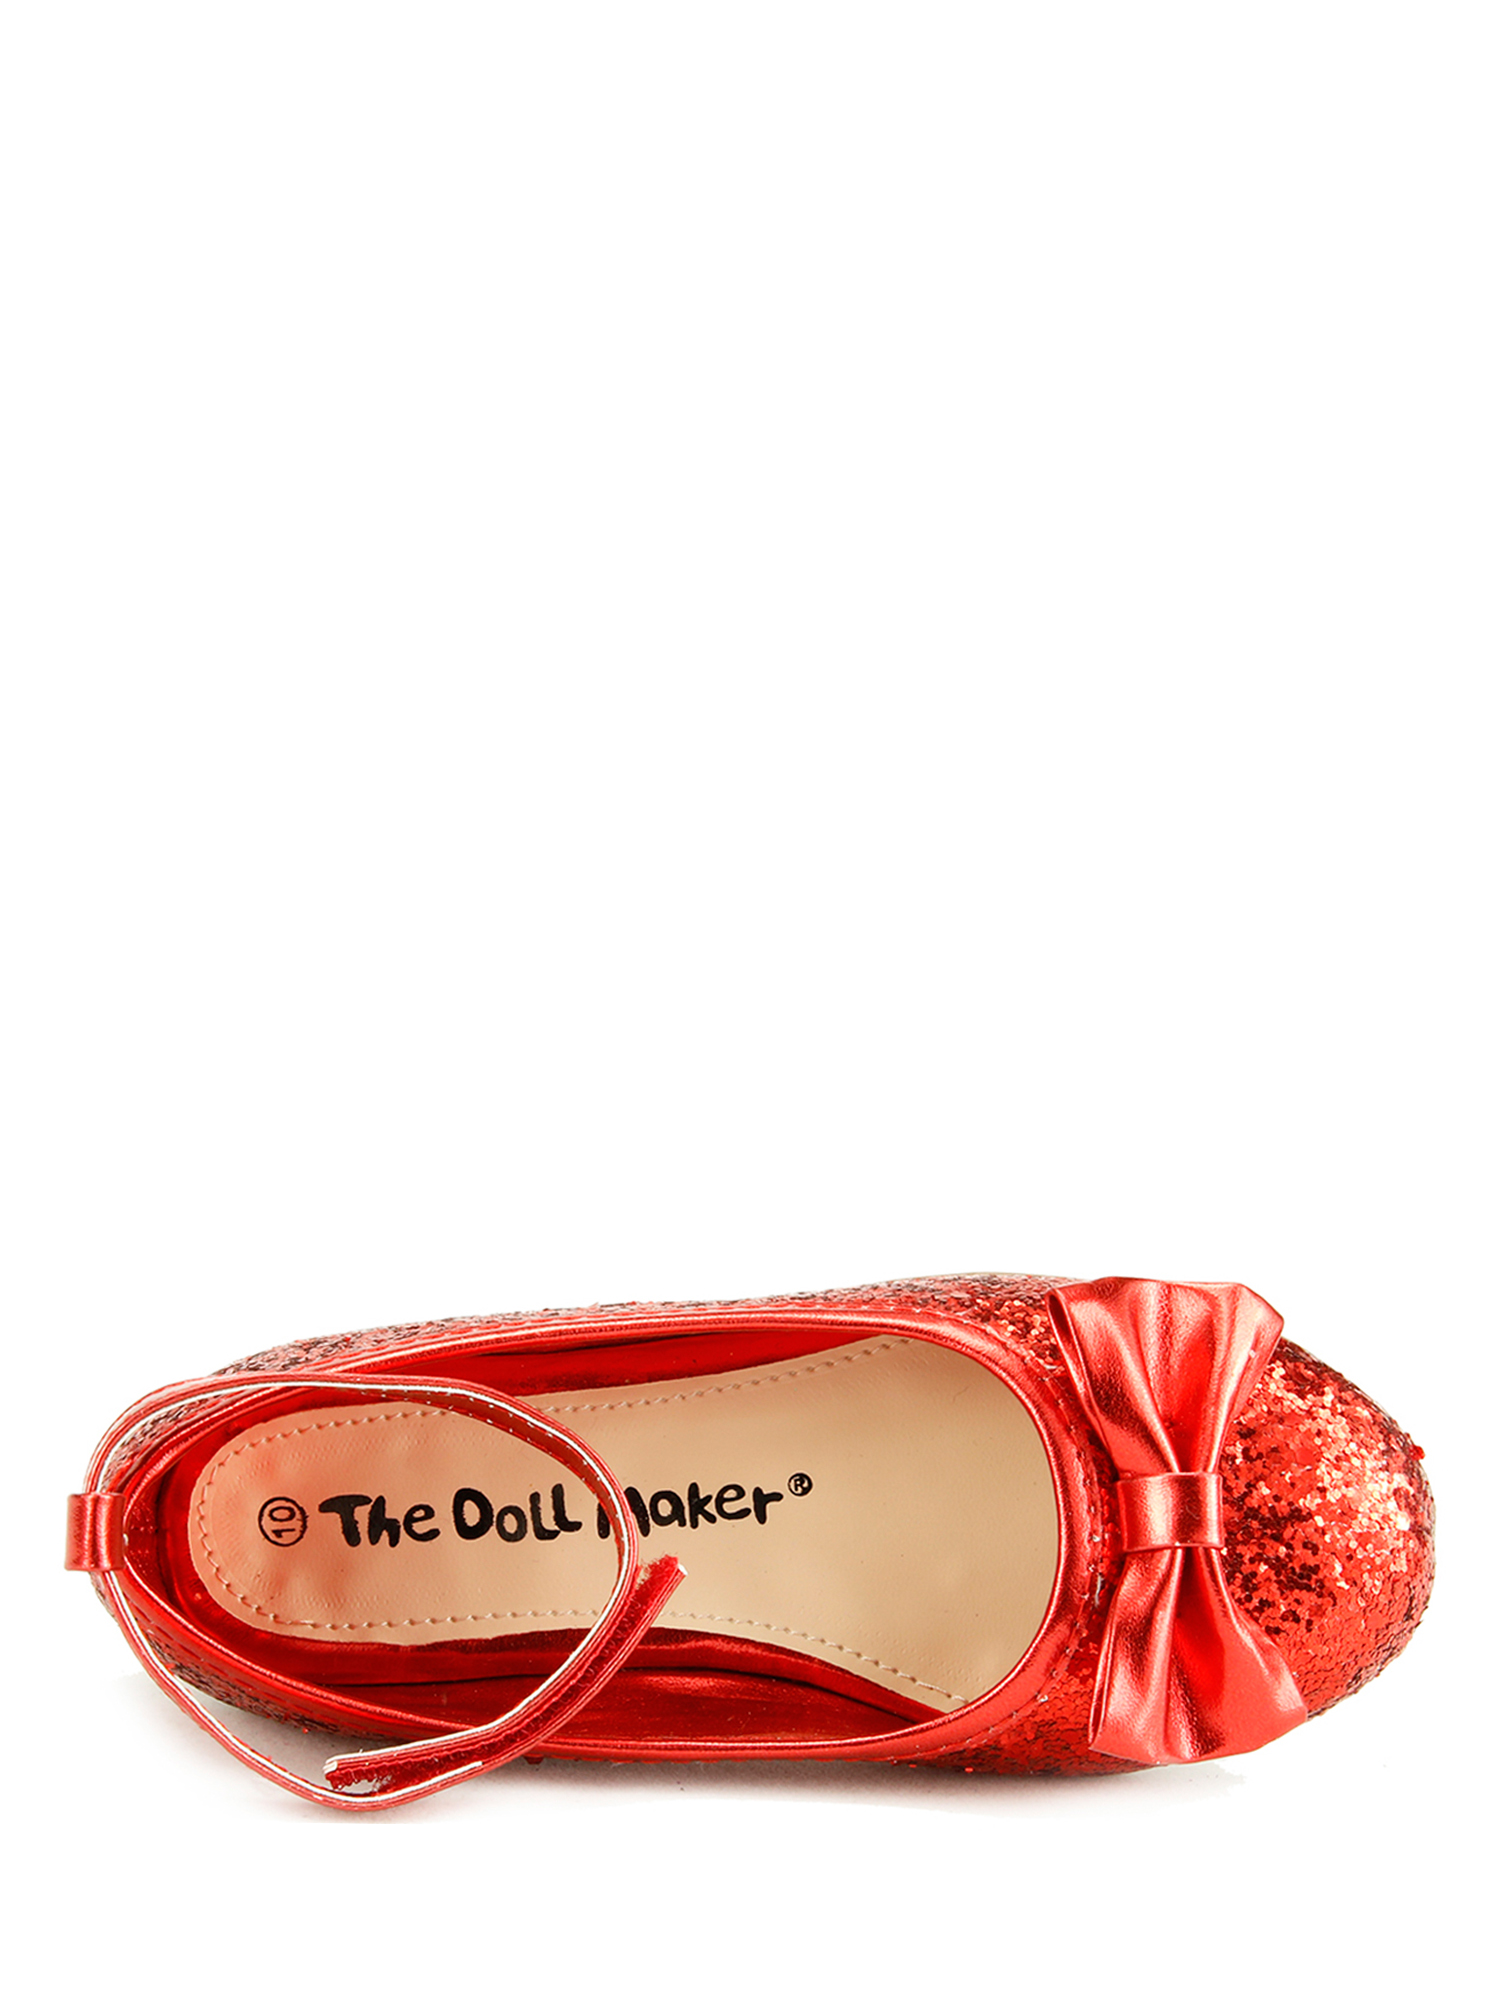 The Doll Maker Metallic Glitter Strap Flat Shoes - TD1511115E-1 - image 3 of 6